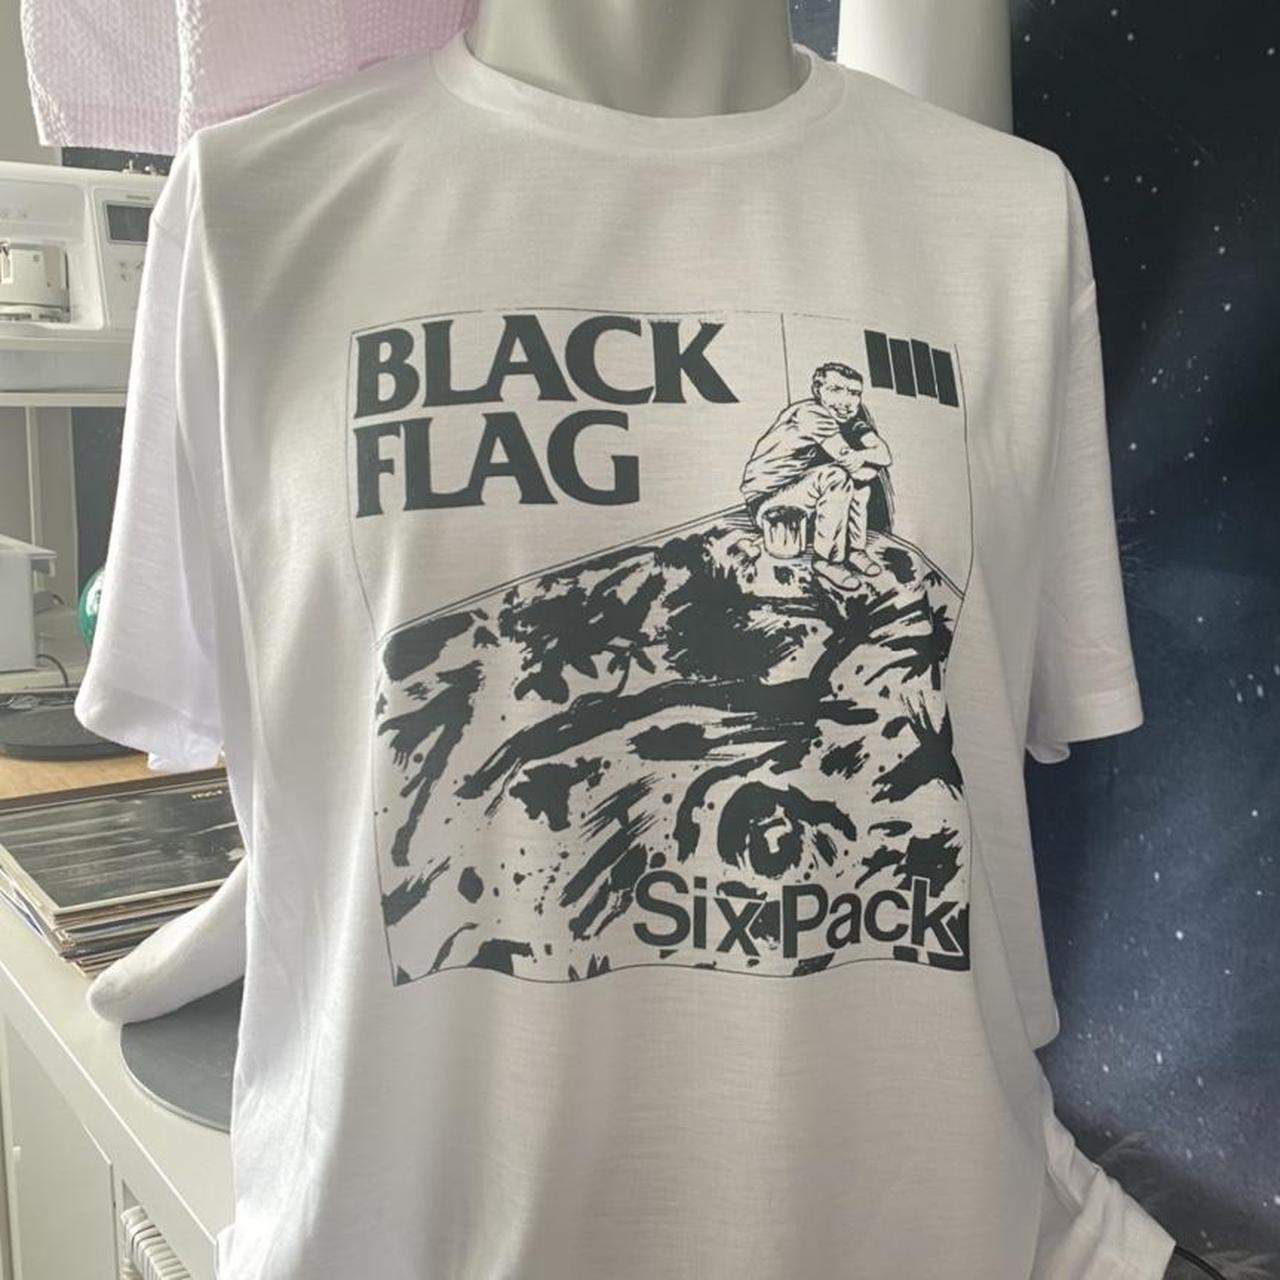 Black Flag Punk Album T-Shirt. Henry Rollins is the... - Depop